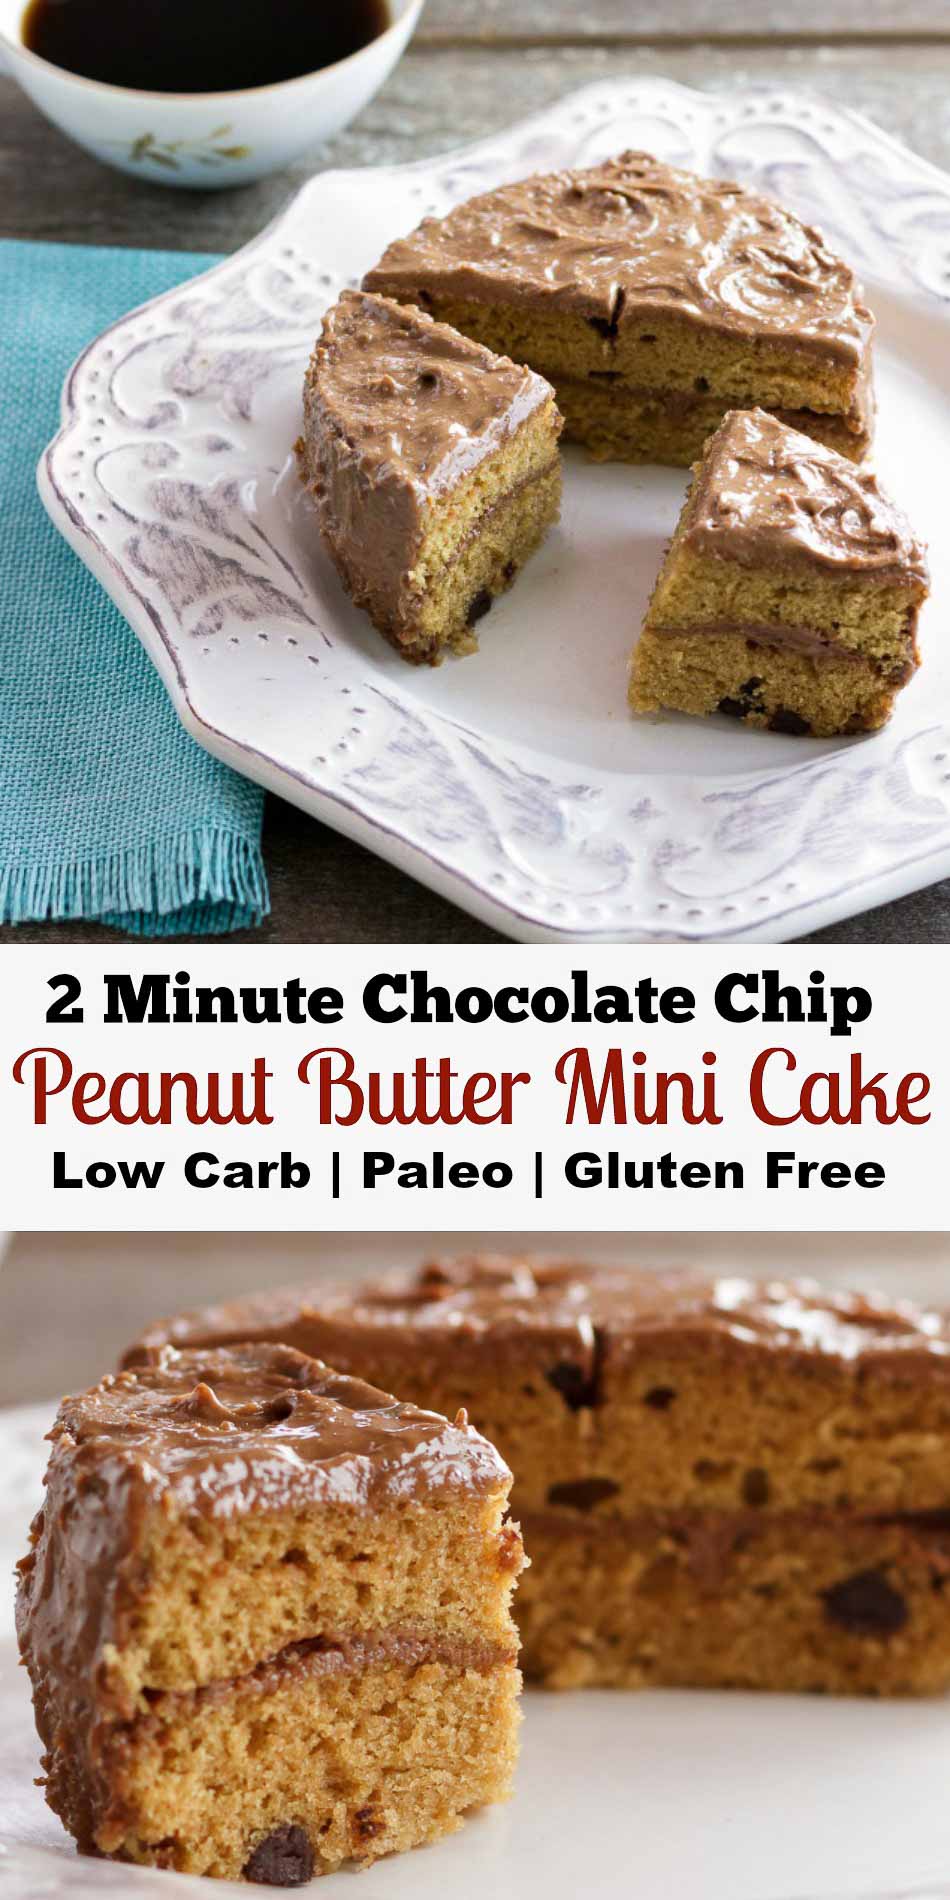 2 Minute Chocolate Chip Peanut Butter Mini Cake - Low carb, gluten free & paleo version